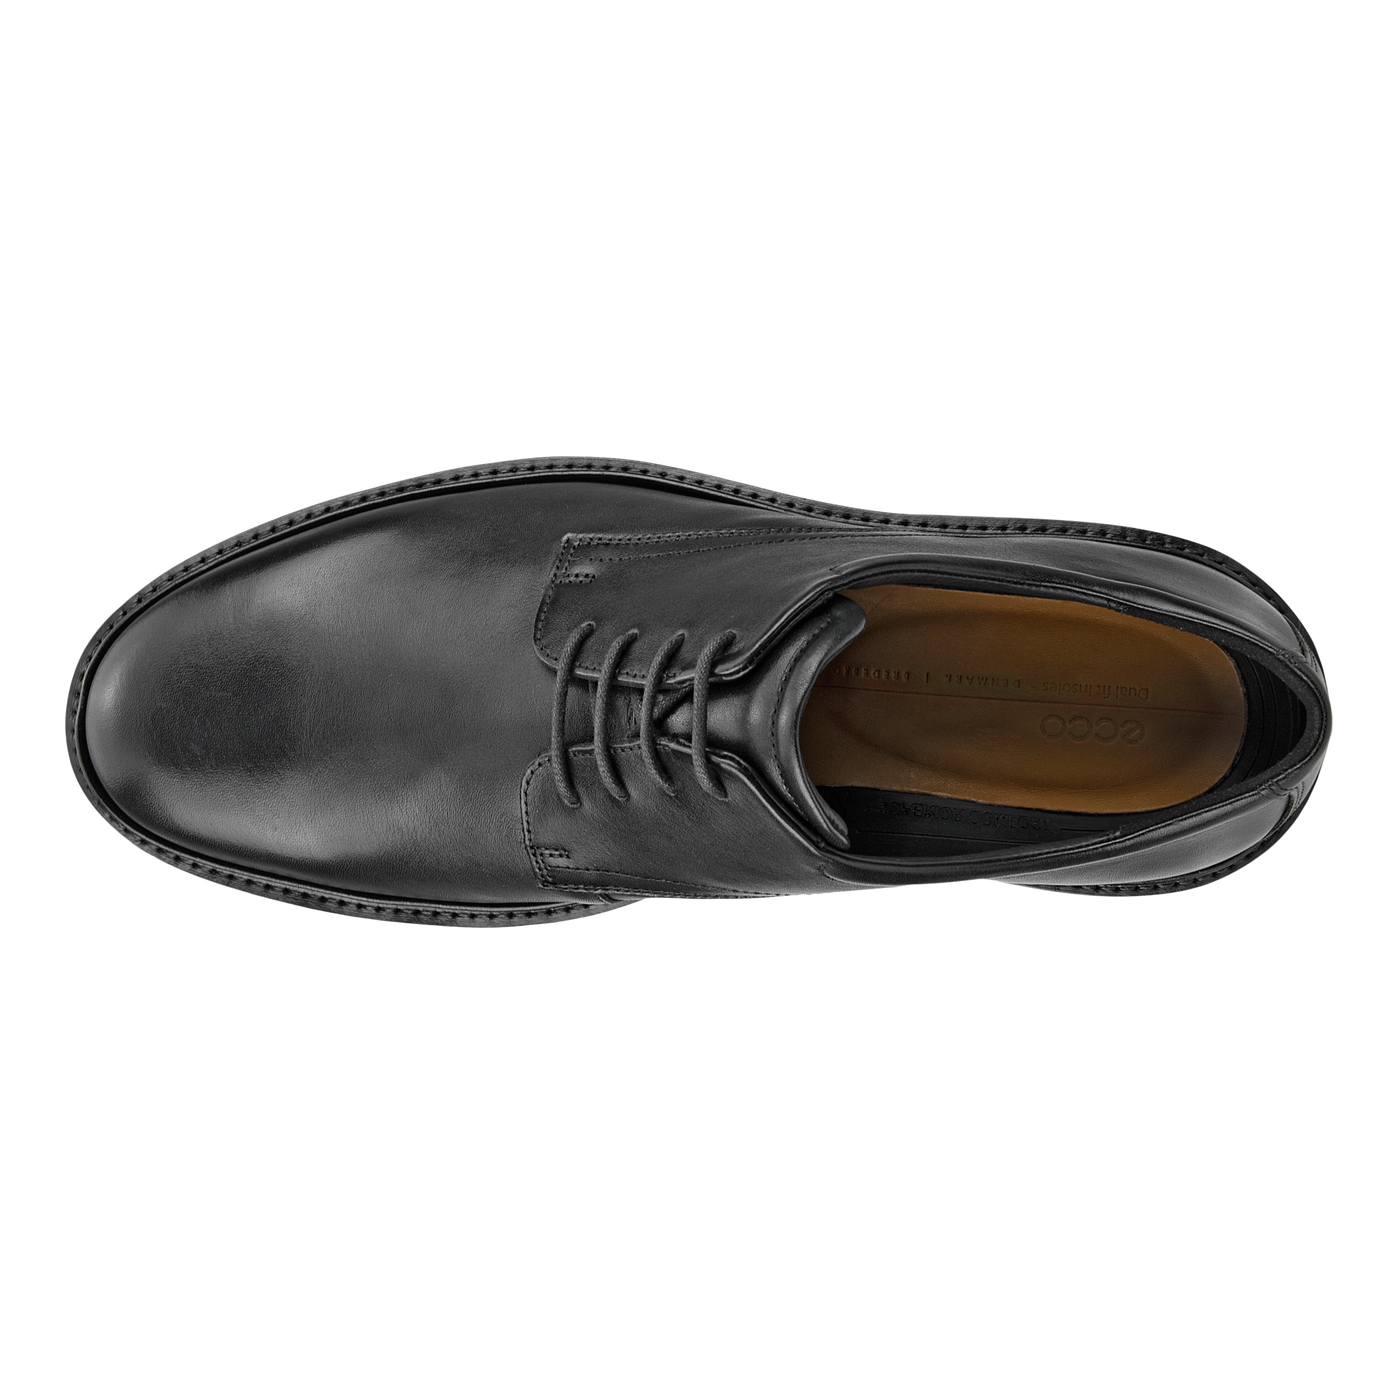 ECCO Men's Metropole London Derby Shoes Black